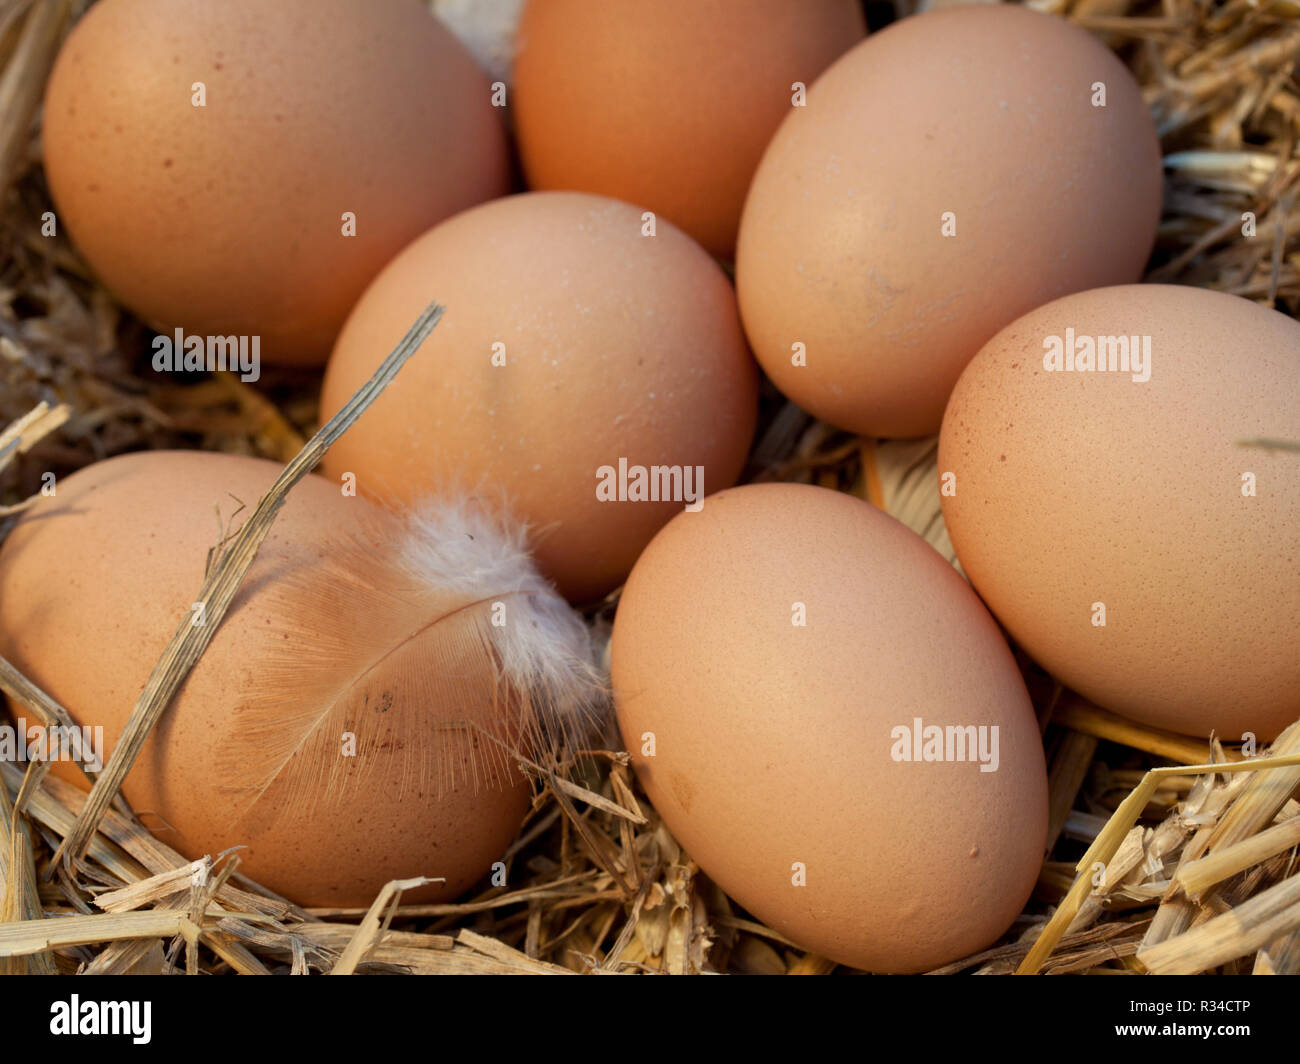 eggs from free-range Stock Photo